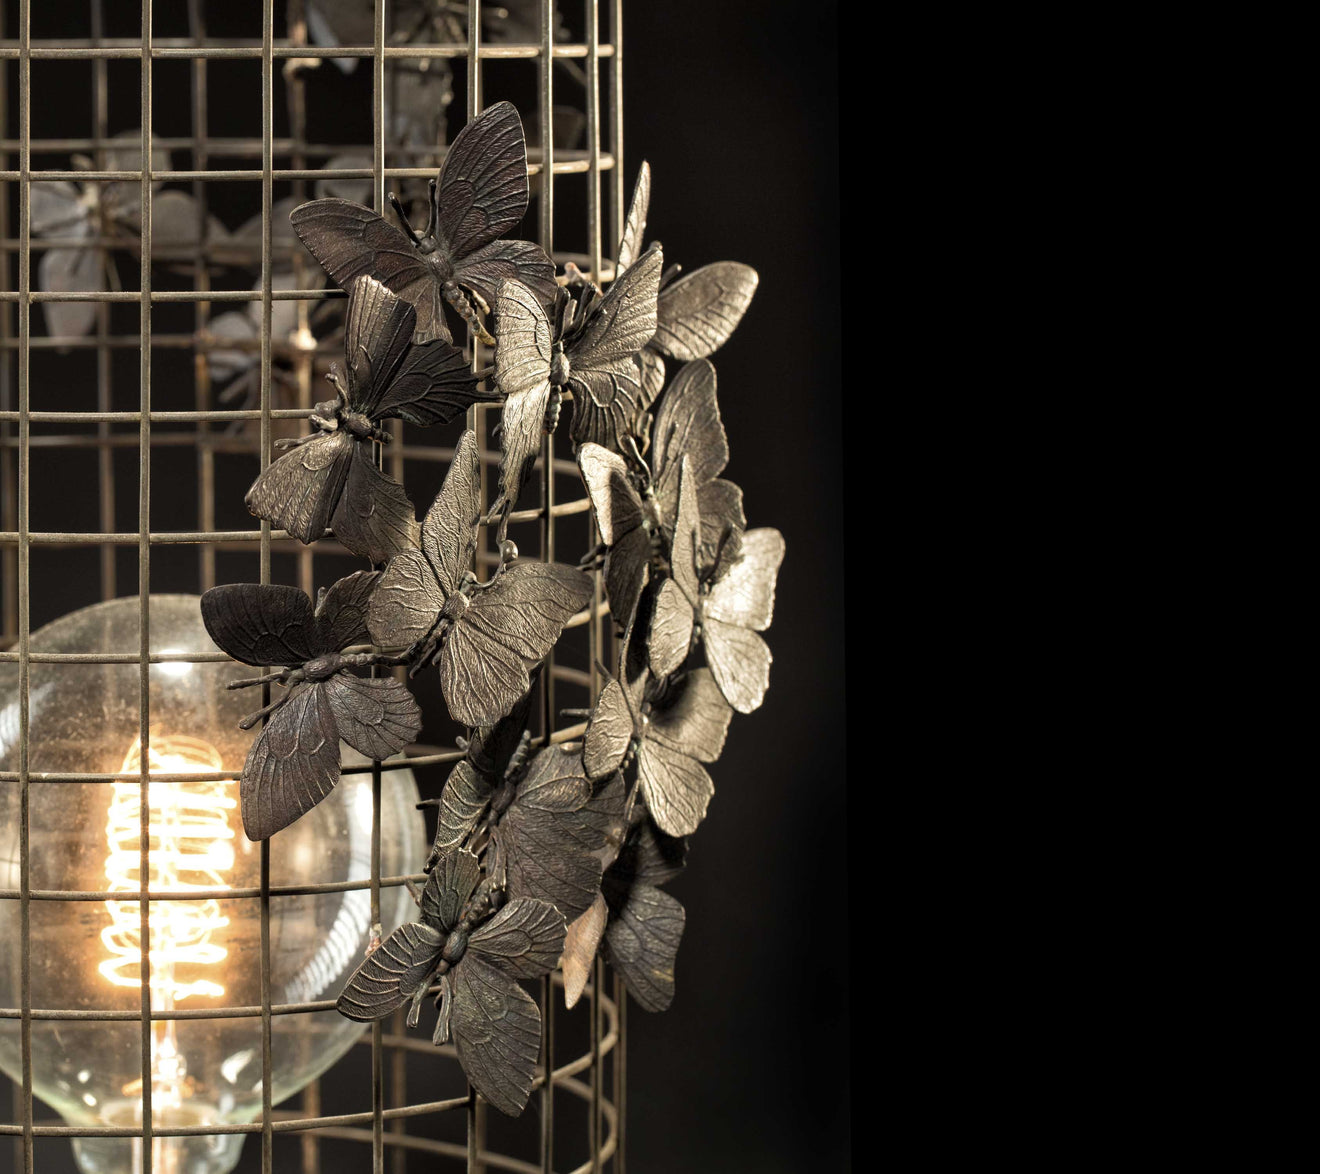 Haunt Cage Lamp, Medium by Jane Hallworth